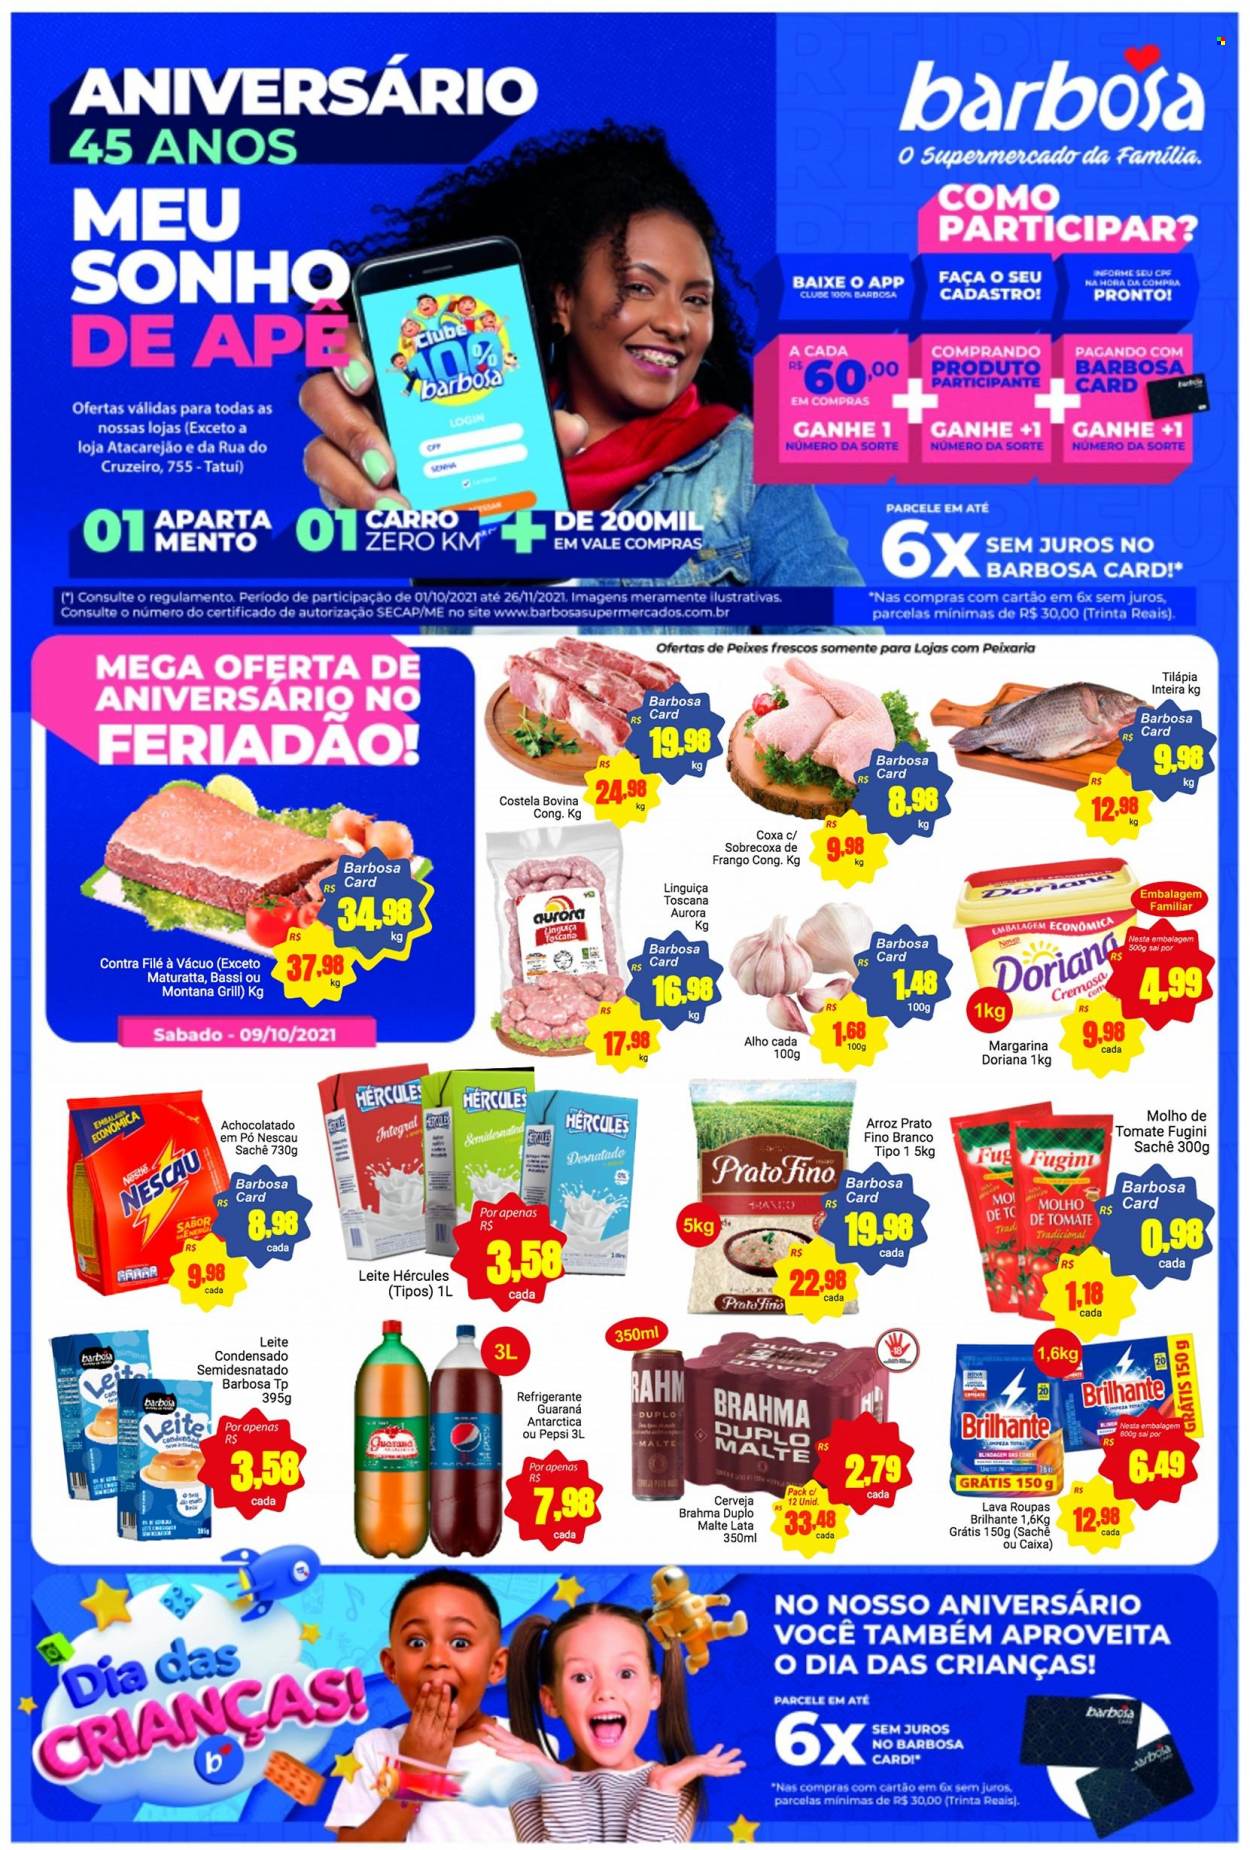 Encarte Barbosa Supermercados  - 08.10.2021 - 12.10.2021.